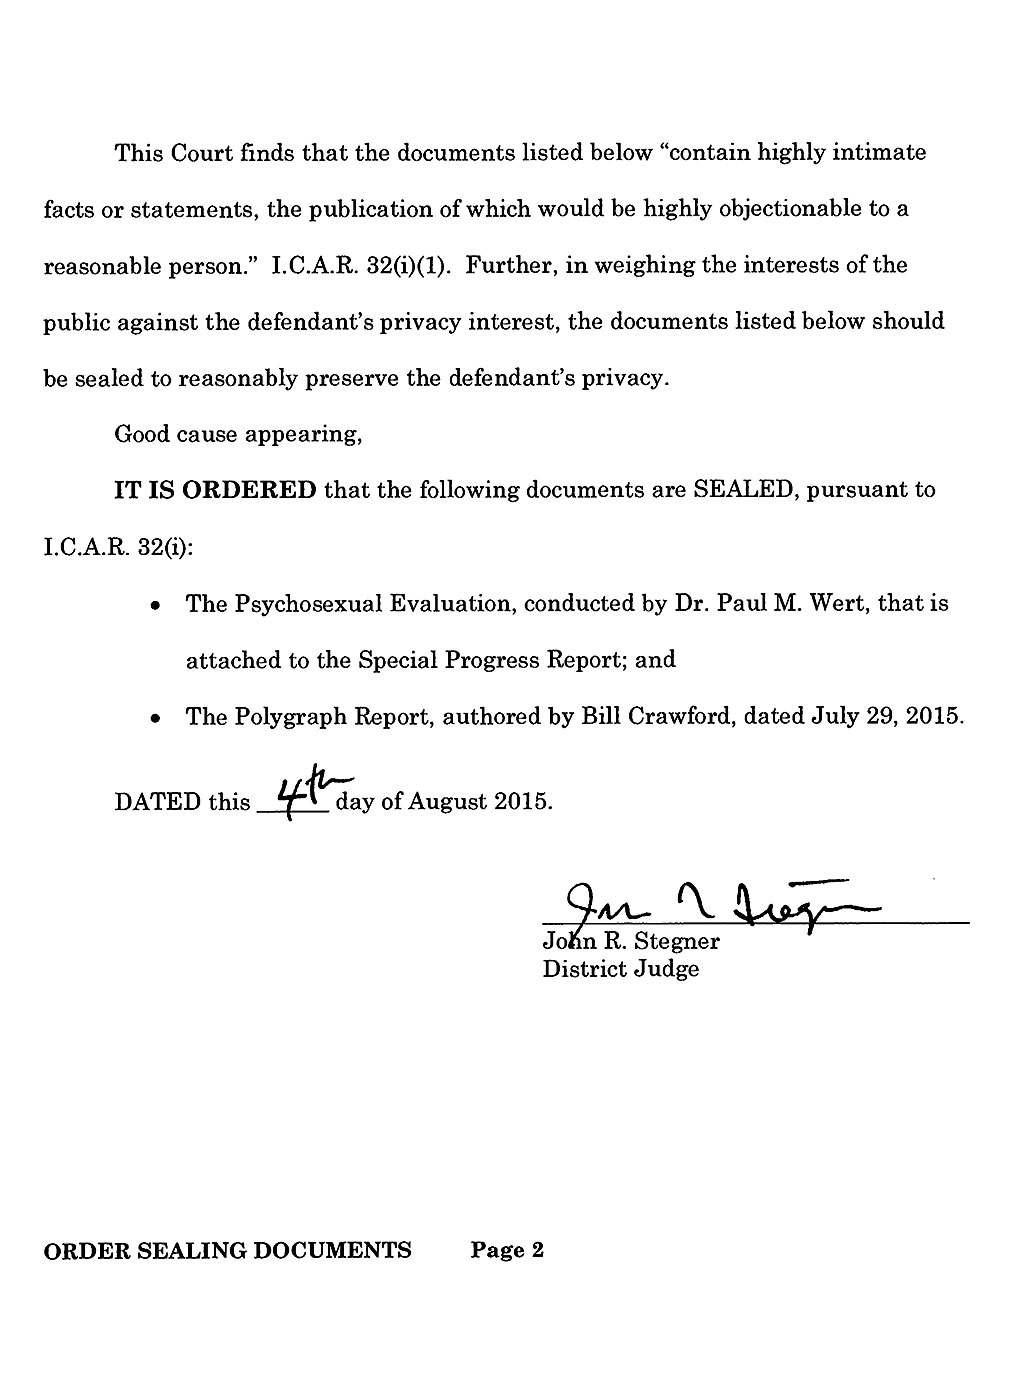 Steven Sitler: Order Sealing Documents, page 2